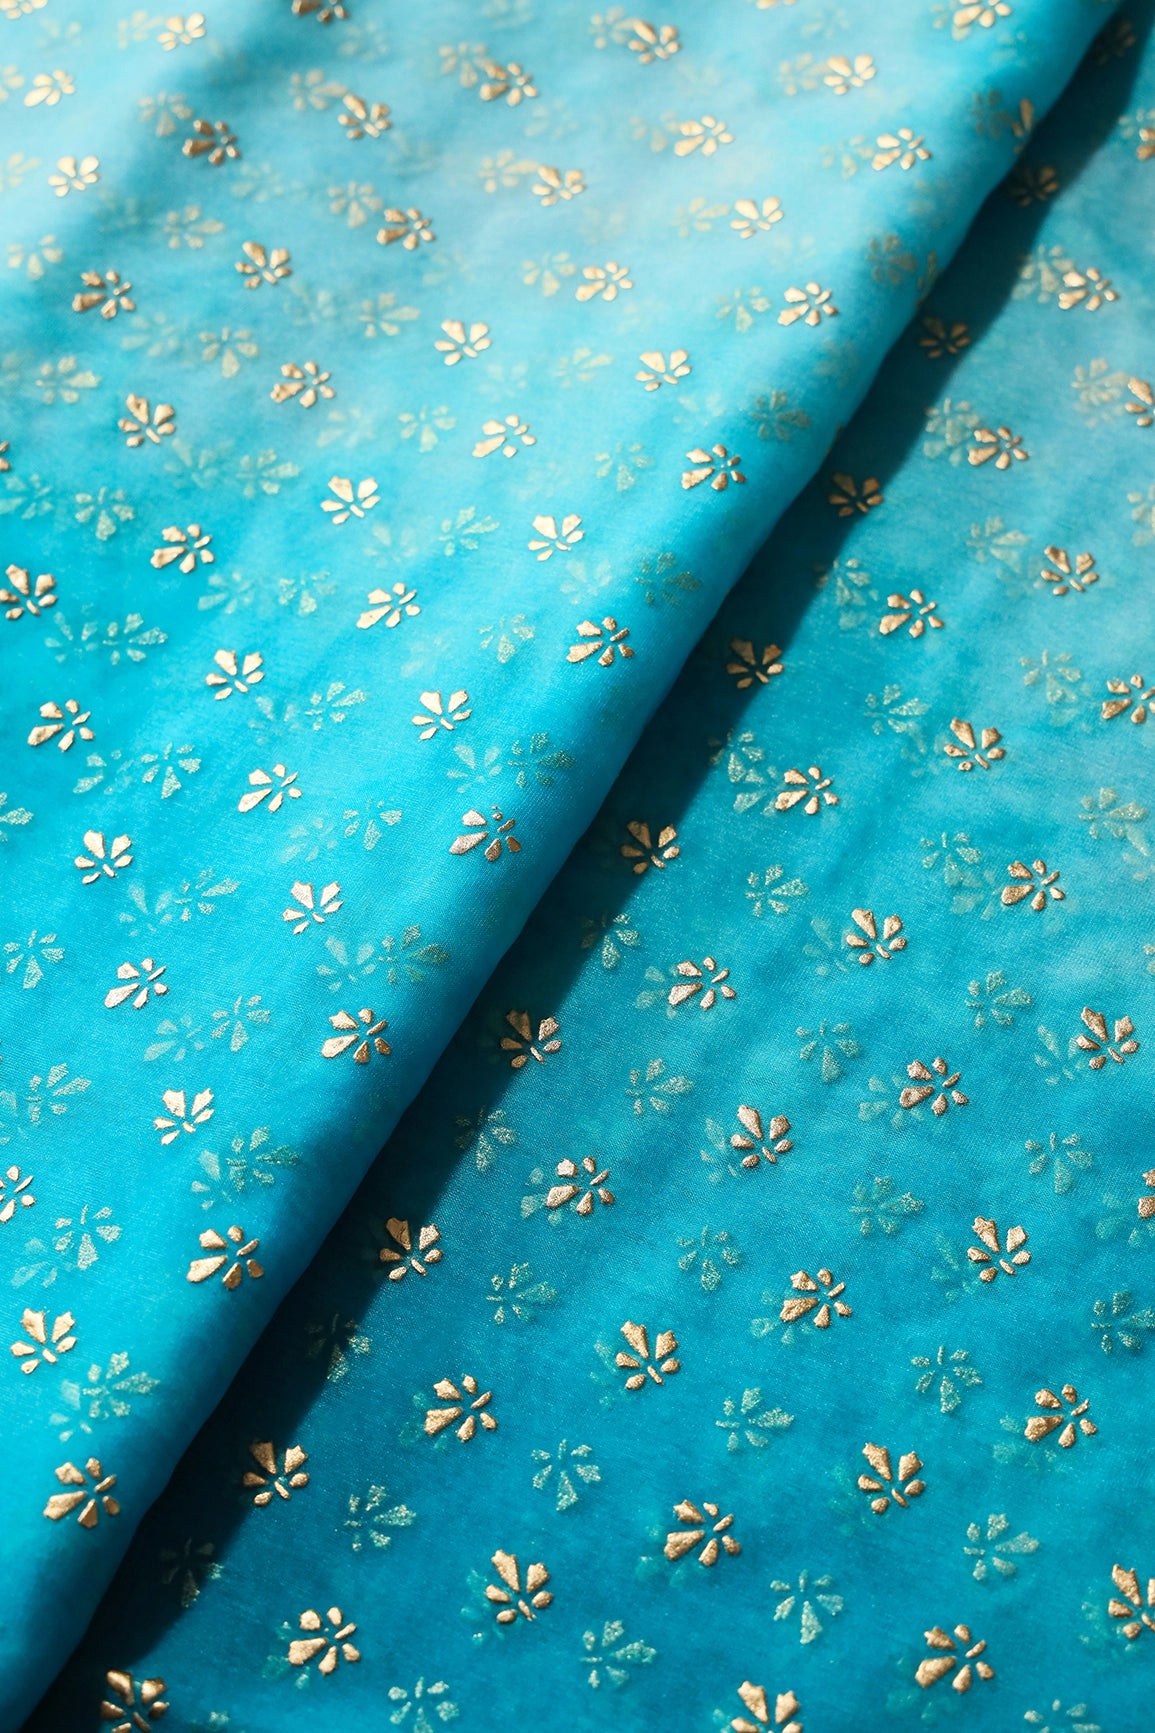 Sky Tie & Dye Shibori Small Floral Motif Foil Print On Organza Fabric